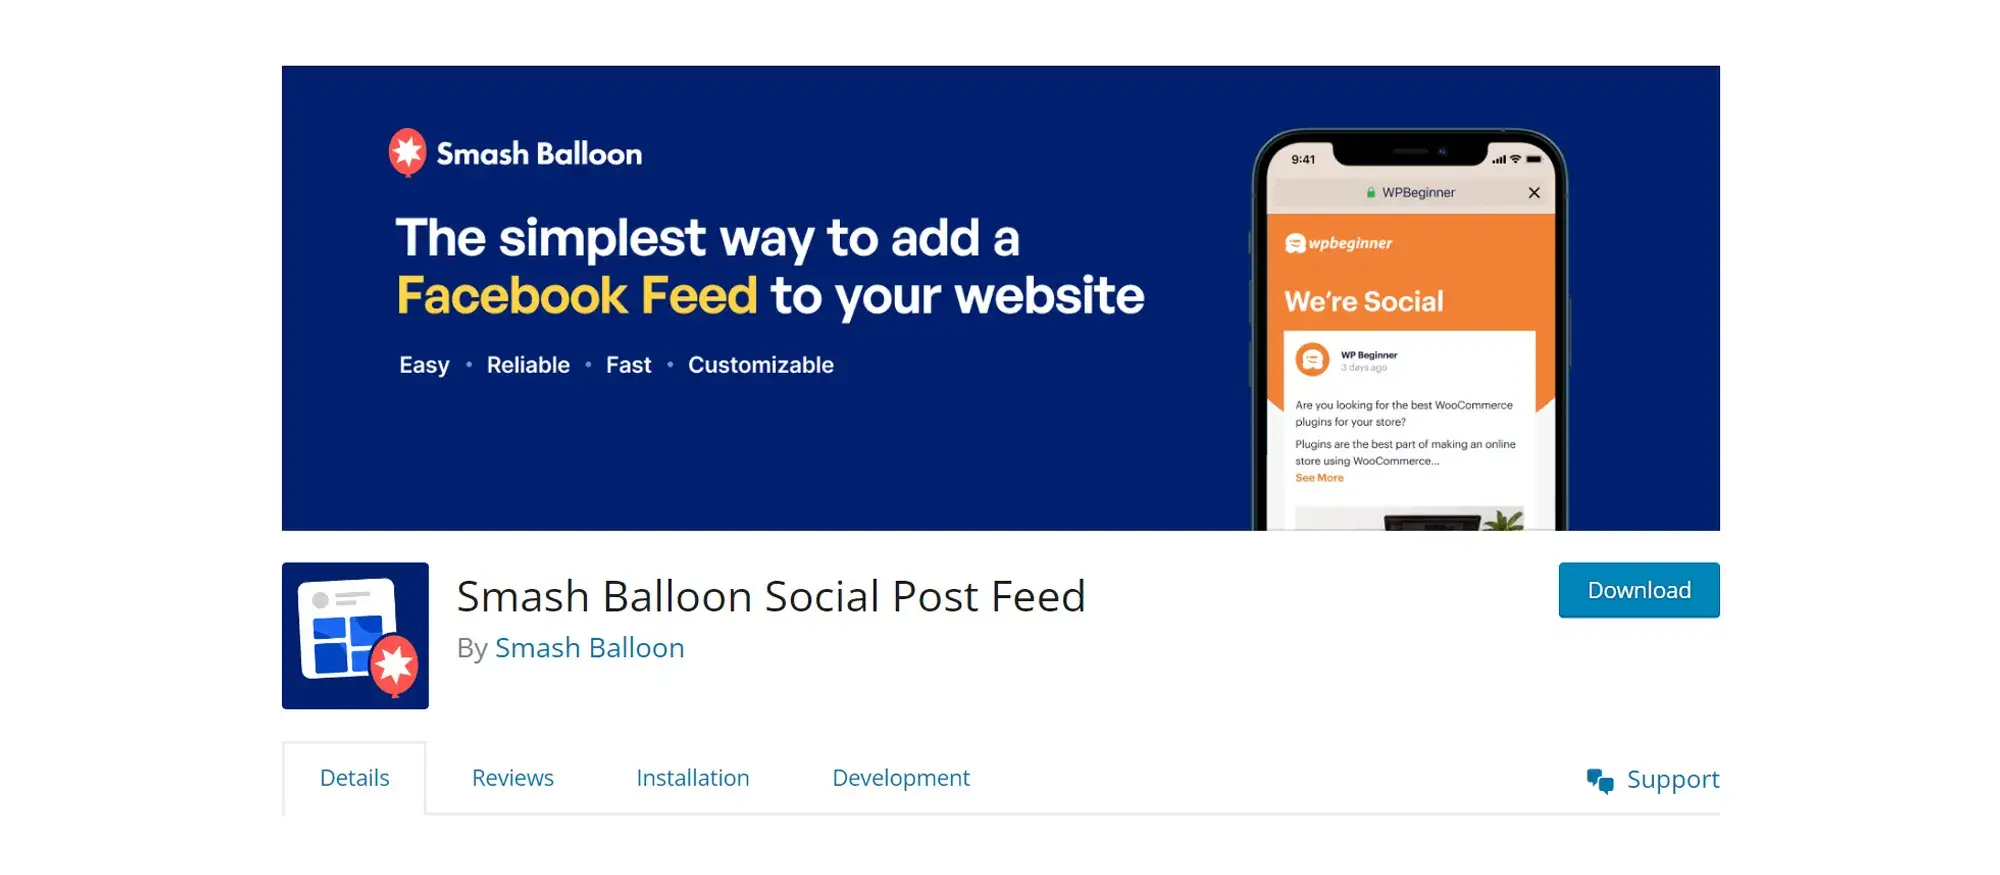 Smash Balloon Social Post Feed